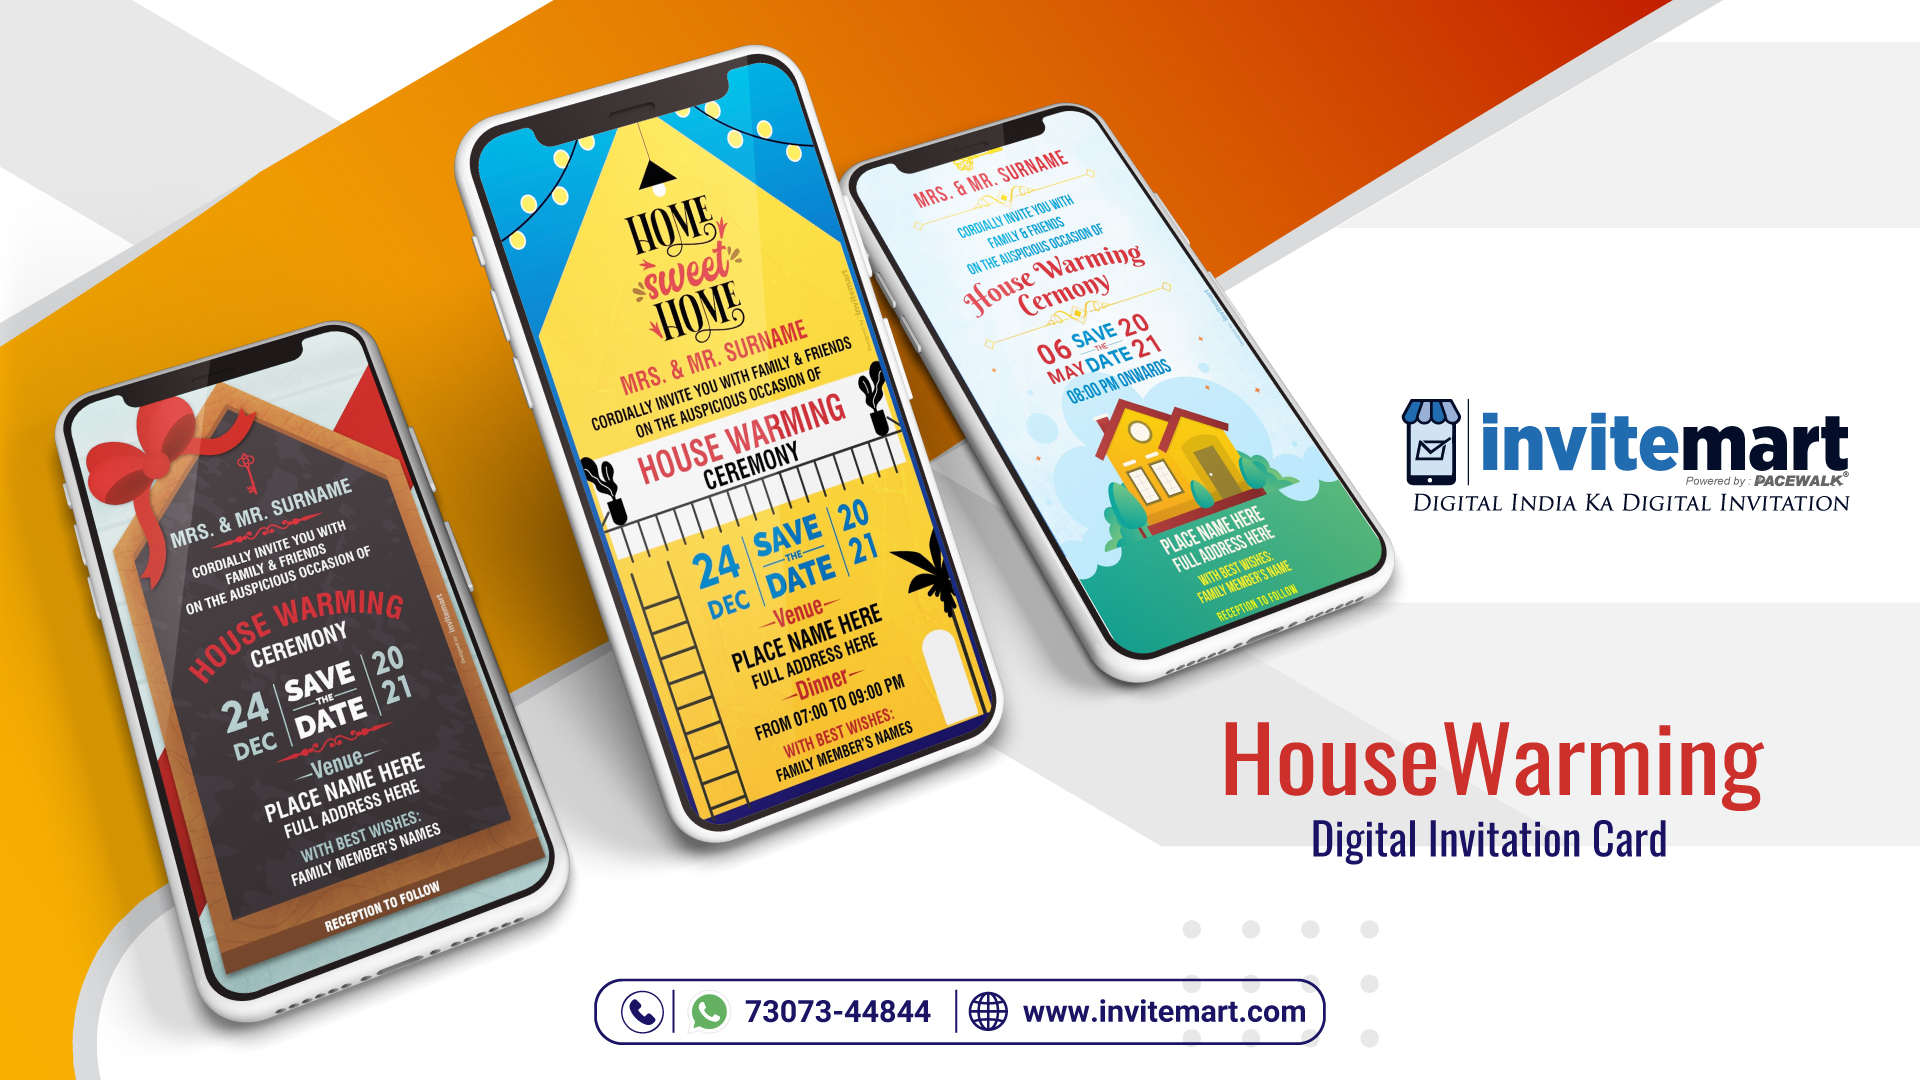 Invitemart housewarming invitation : How to choose the ideal digital Invitation card company?